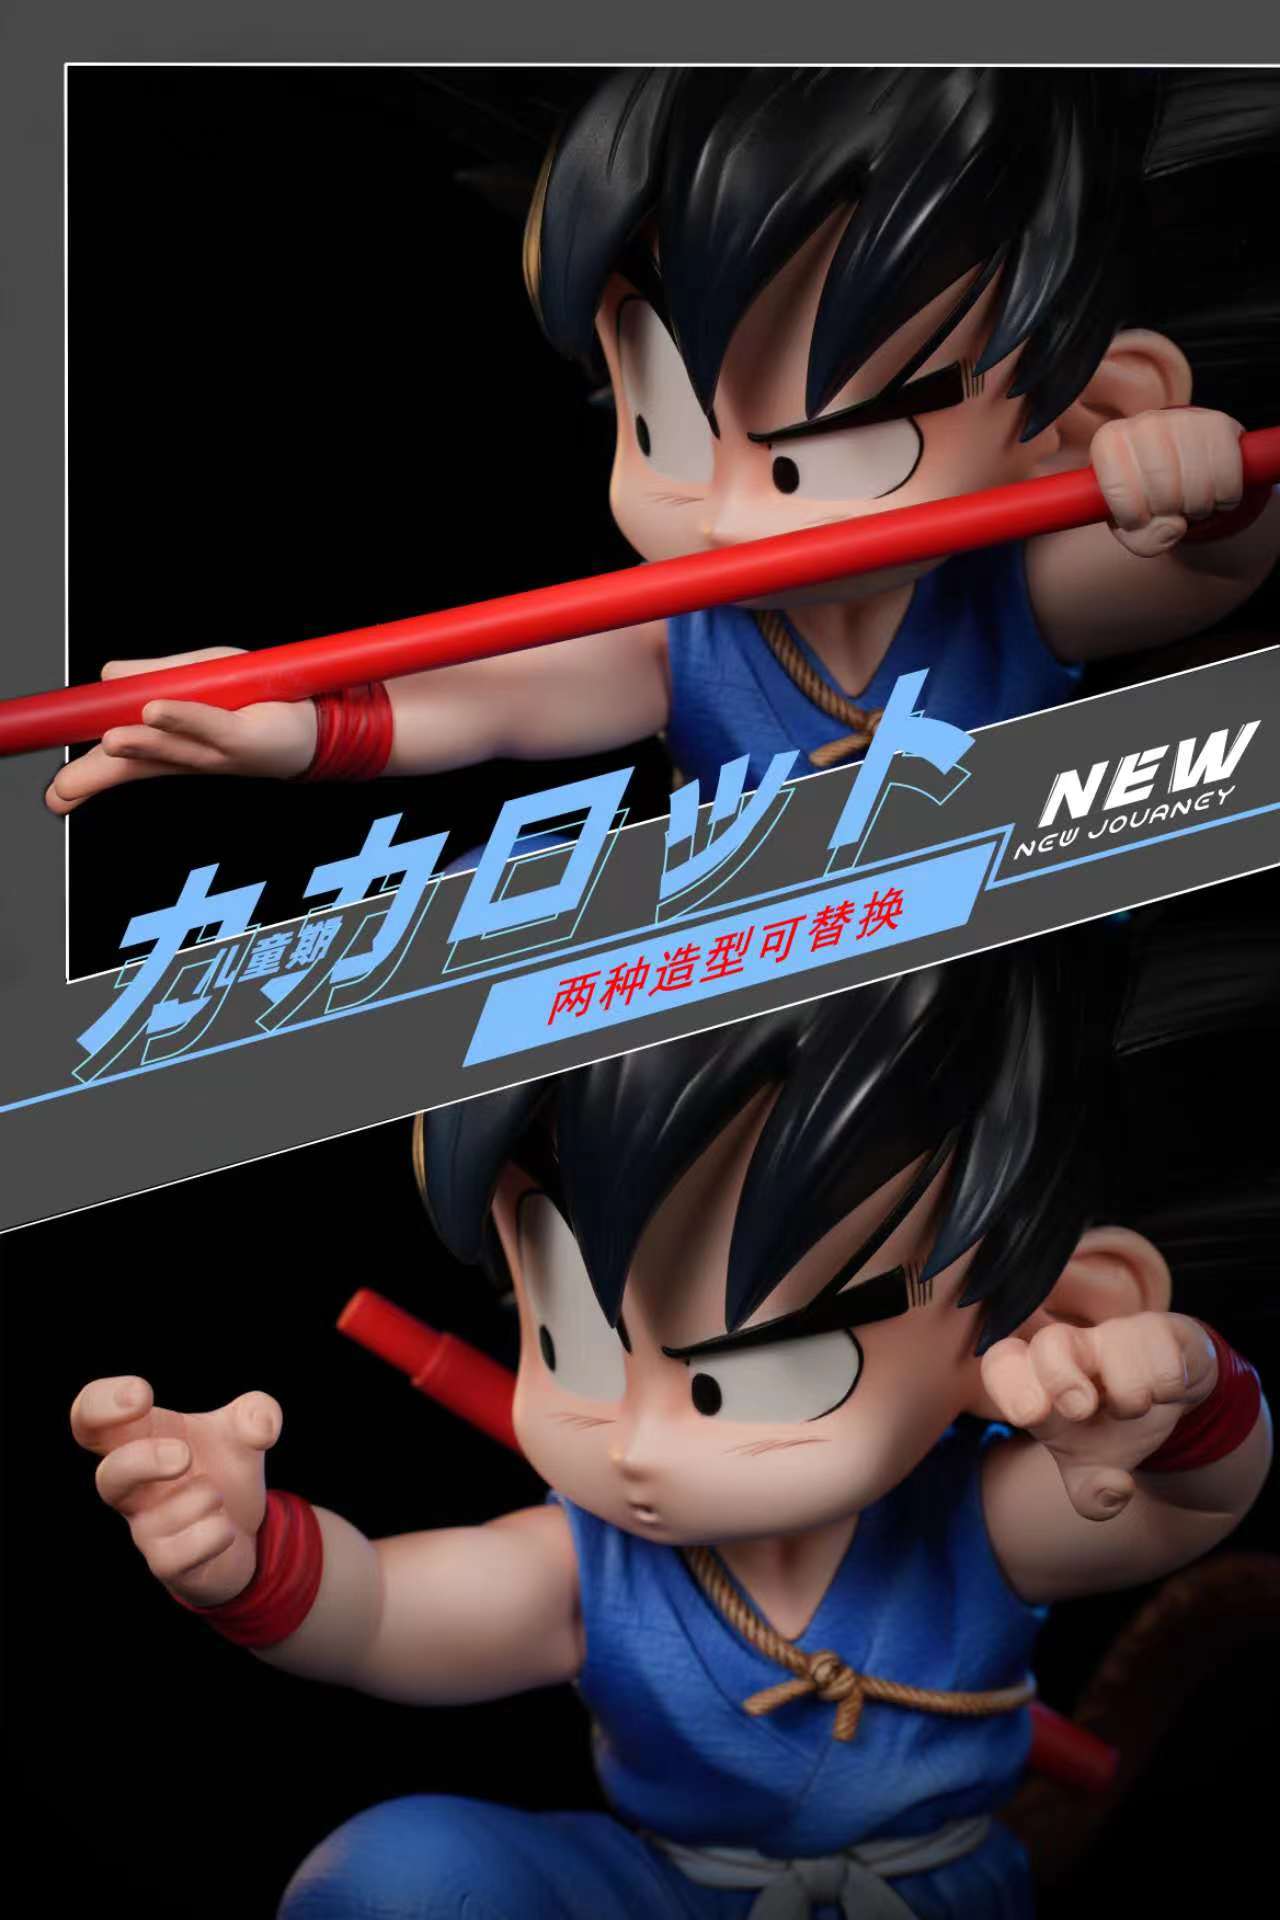 New Journey - Kid Goku